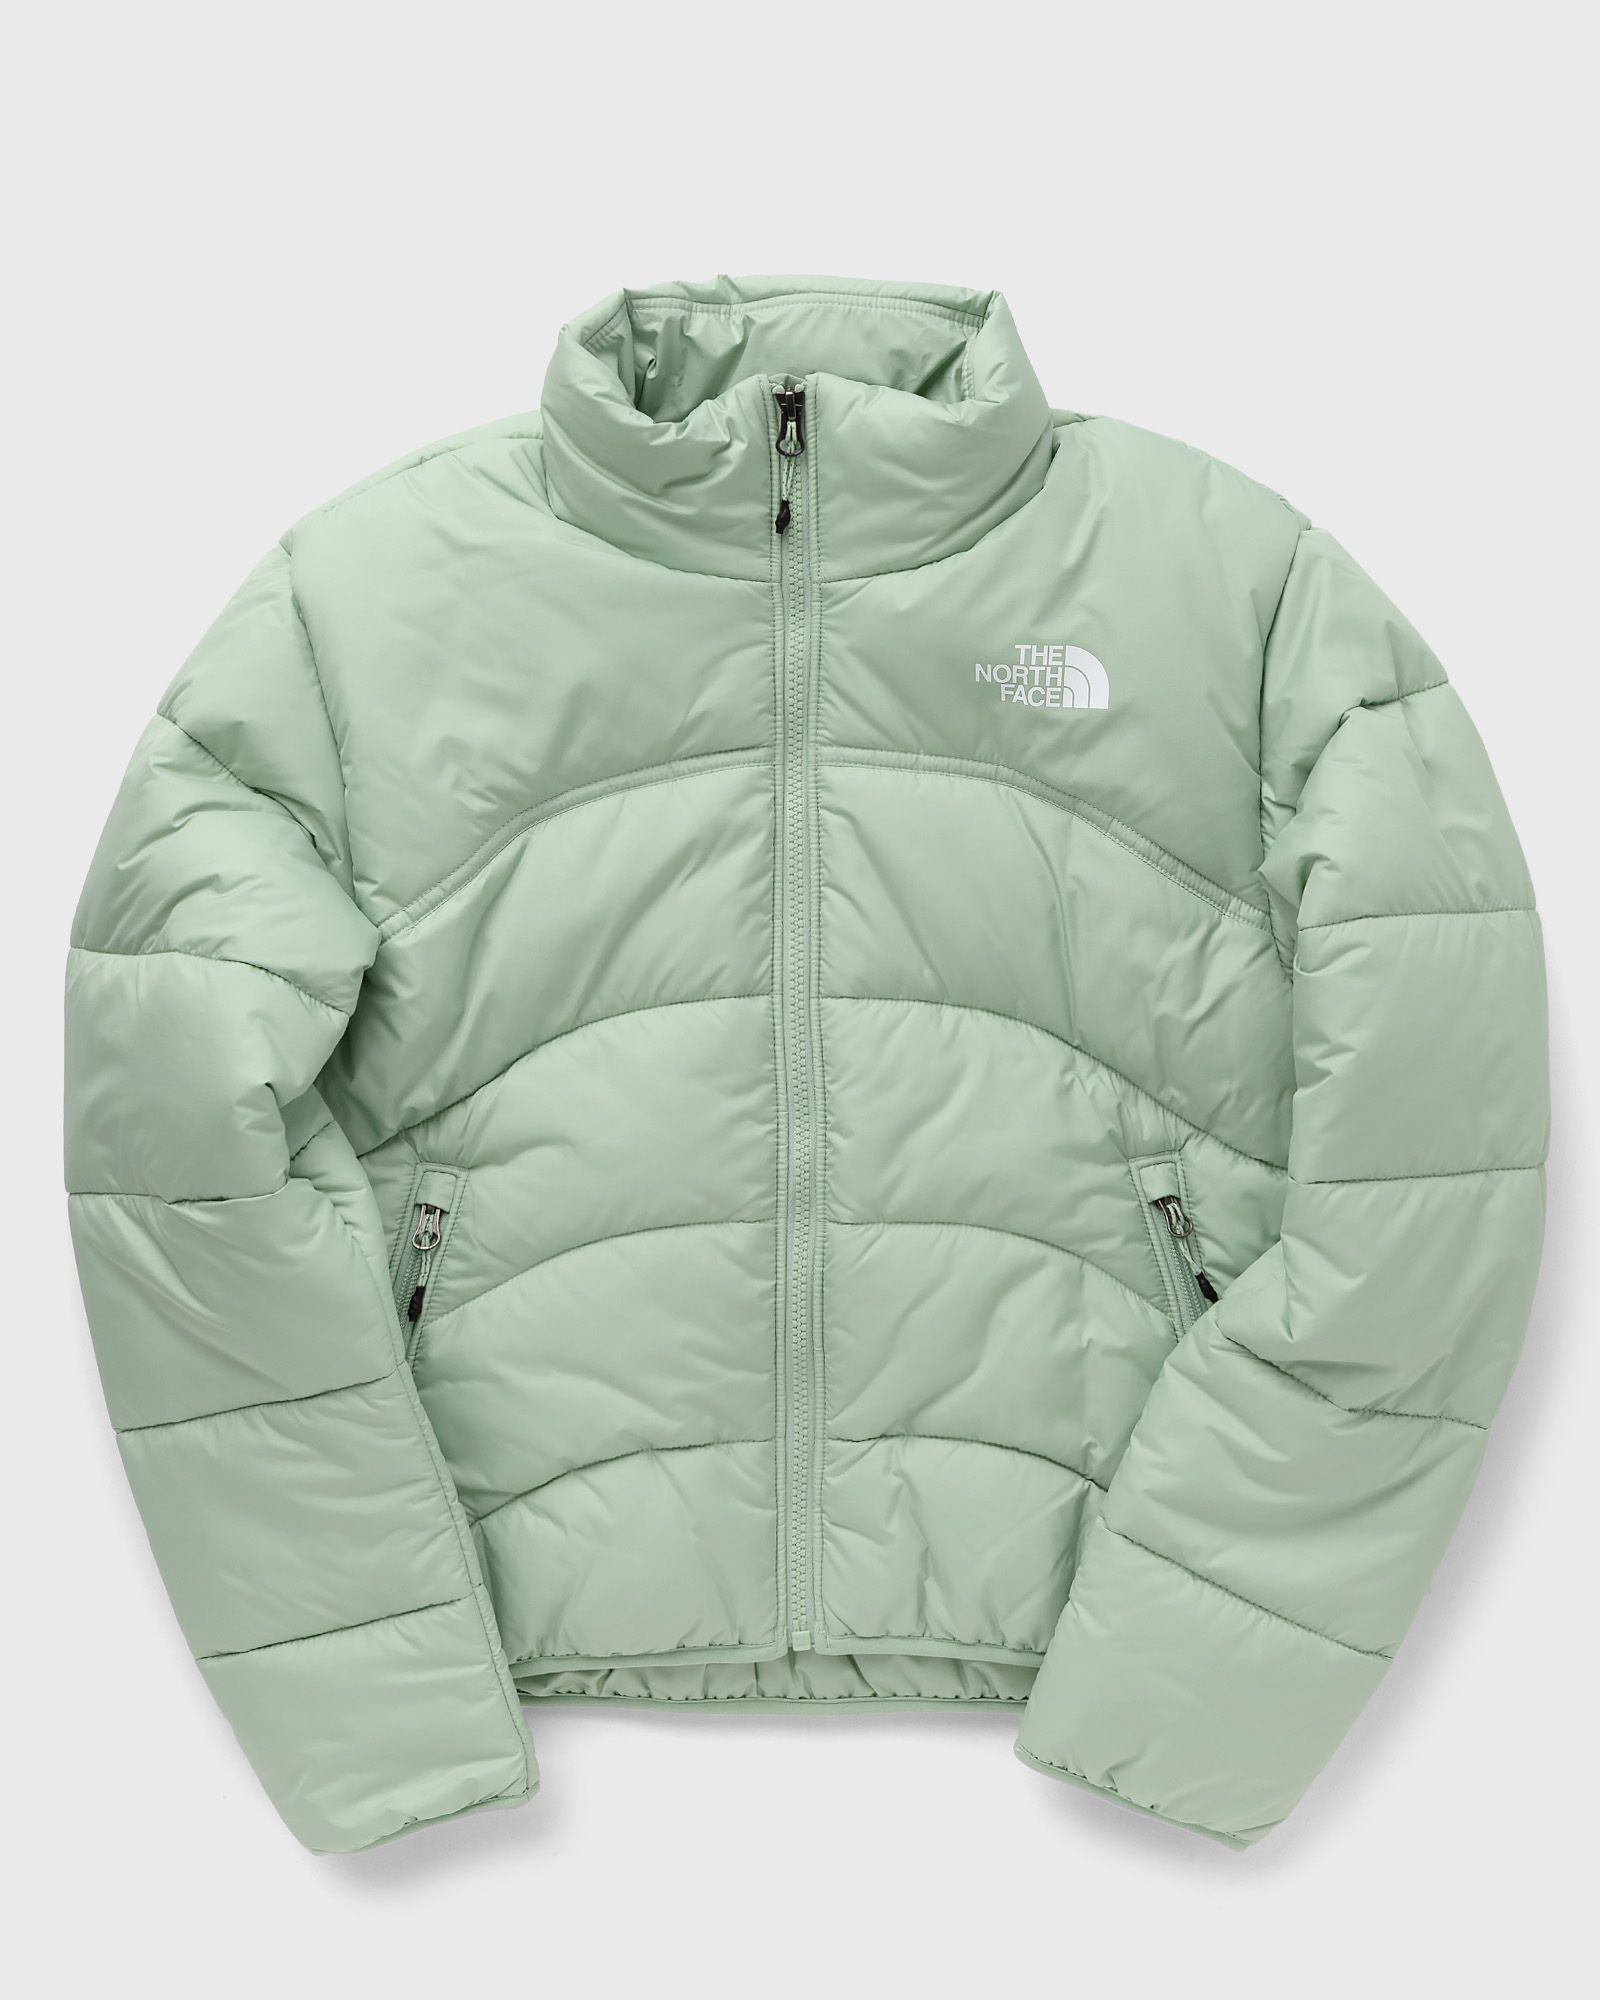 The North Face - women’s jacket 2000 women down & puffer jackets green in größe:l